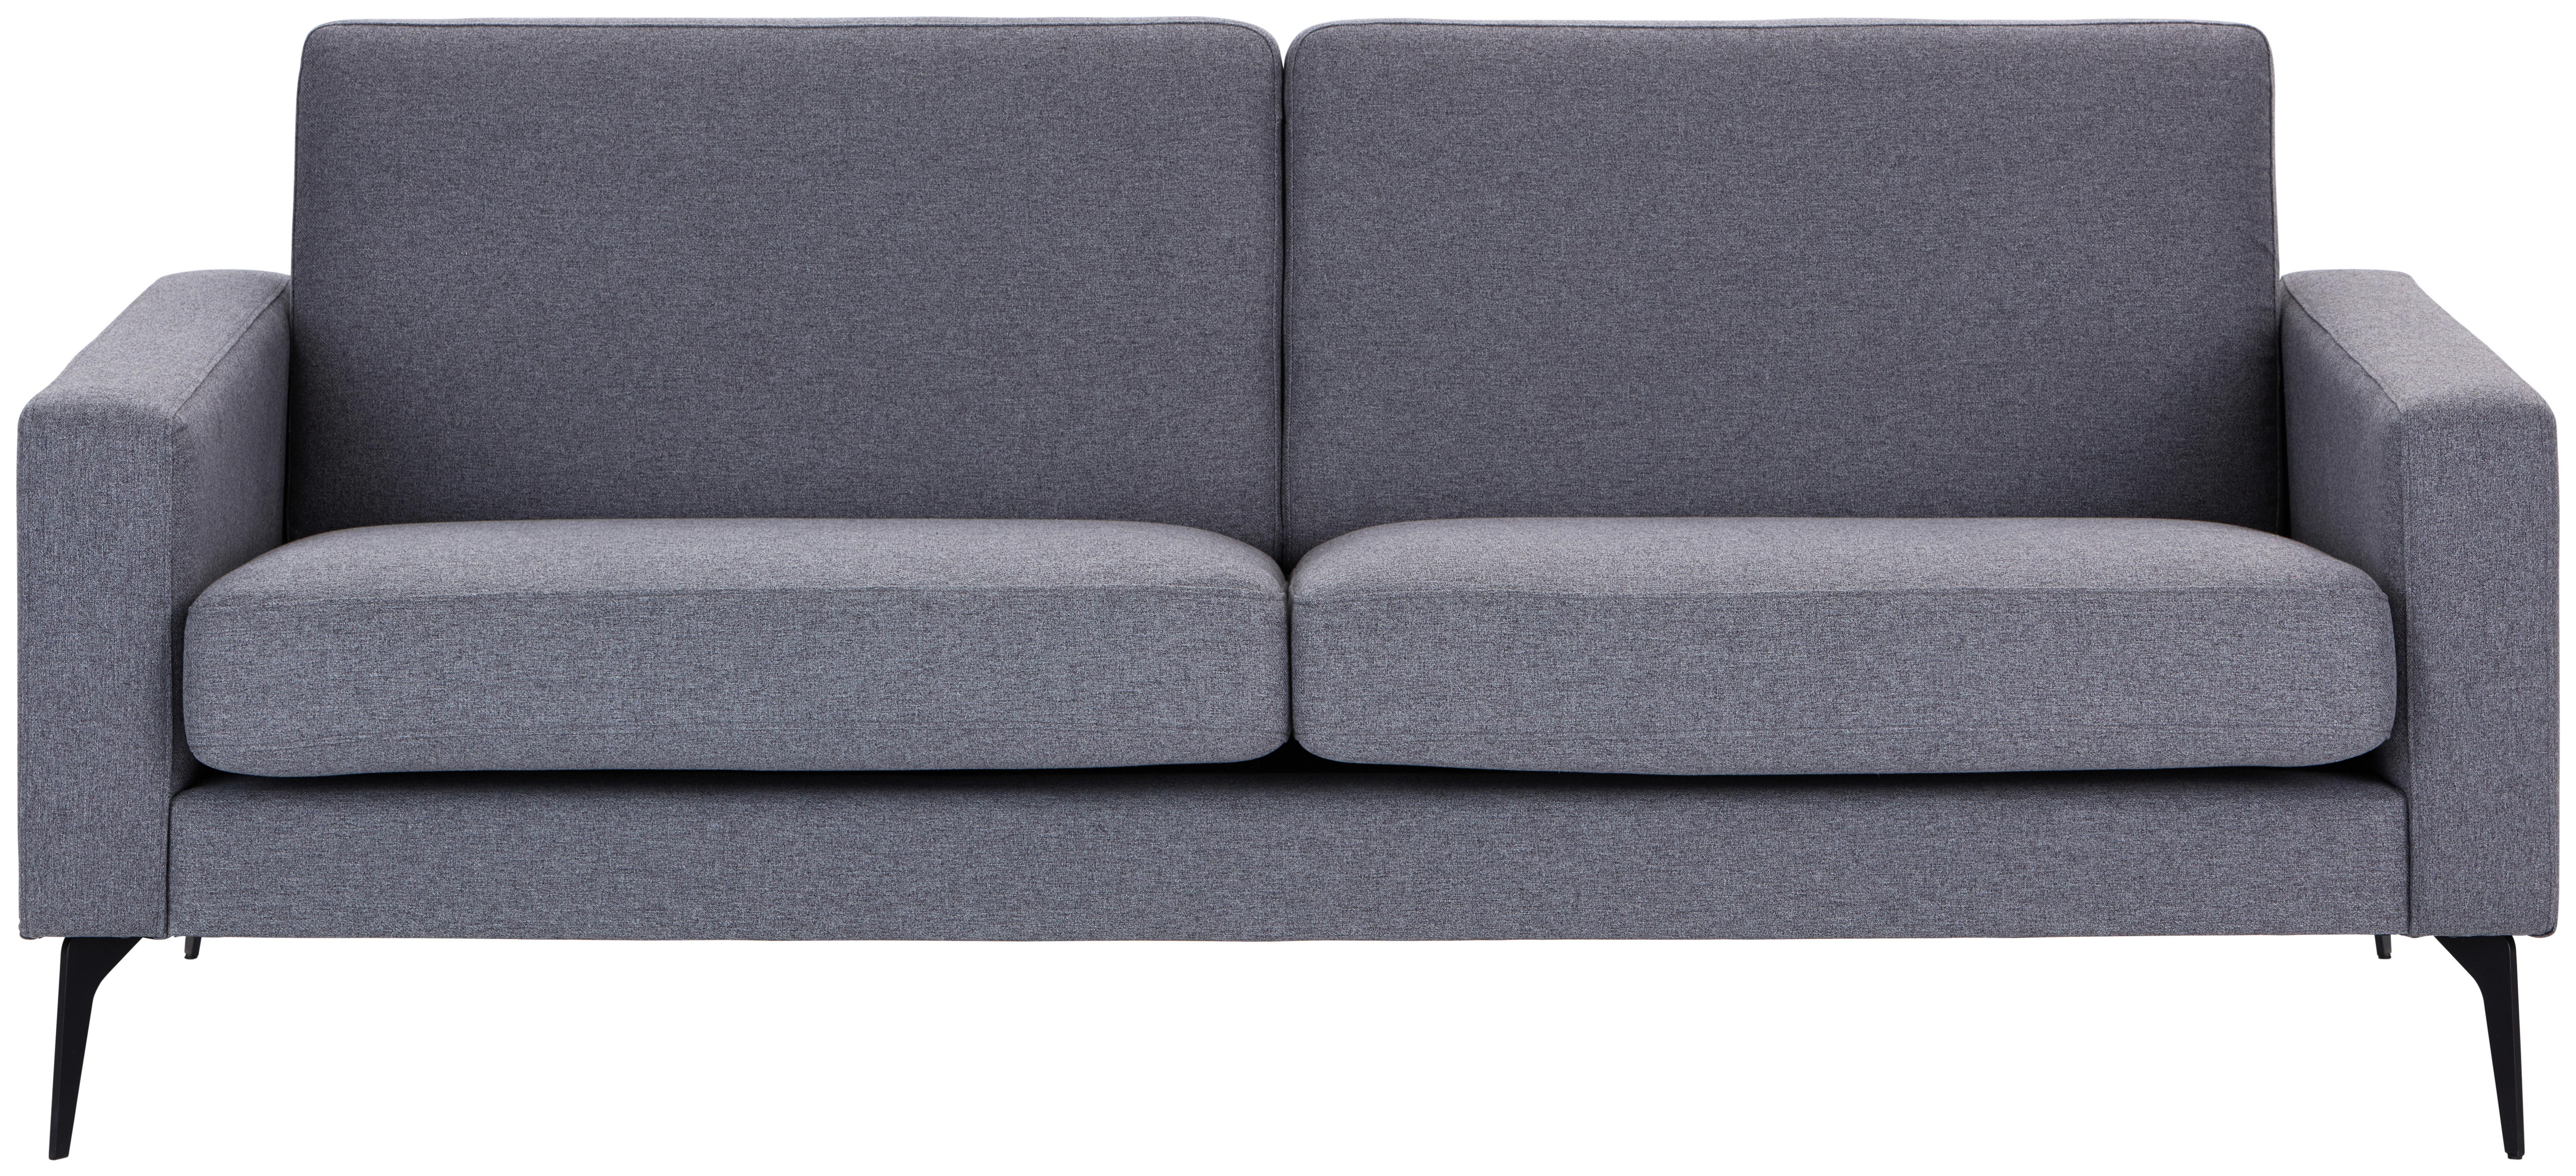 gemütliches Sofa in modernem dunkelgrau